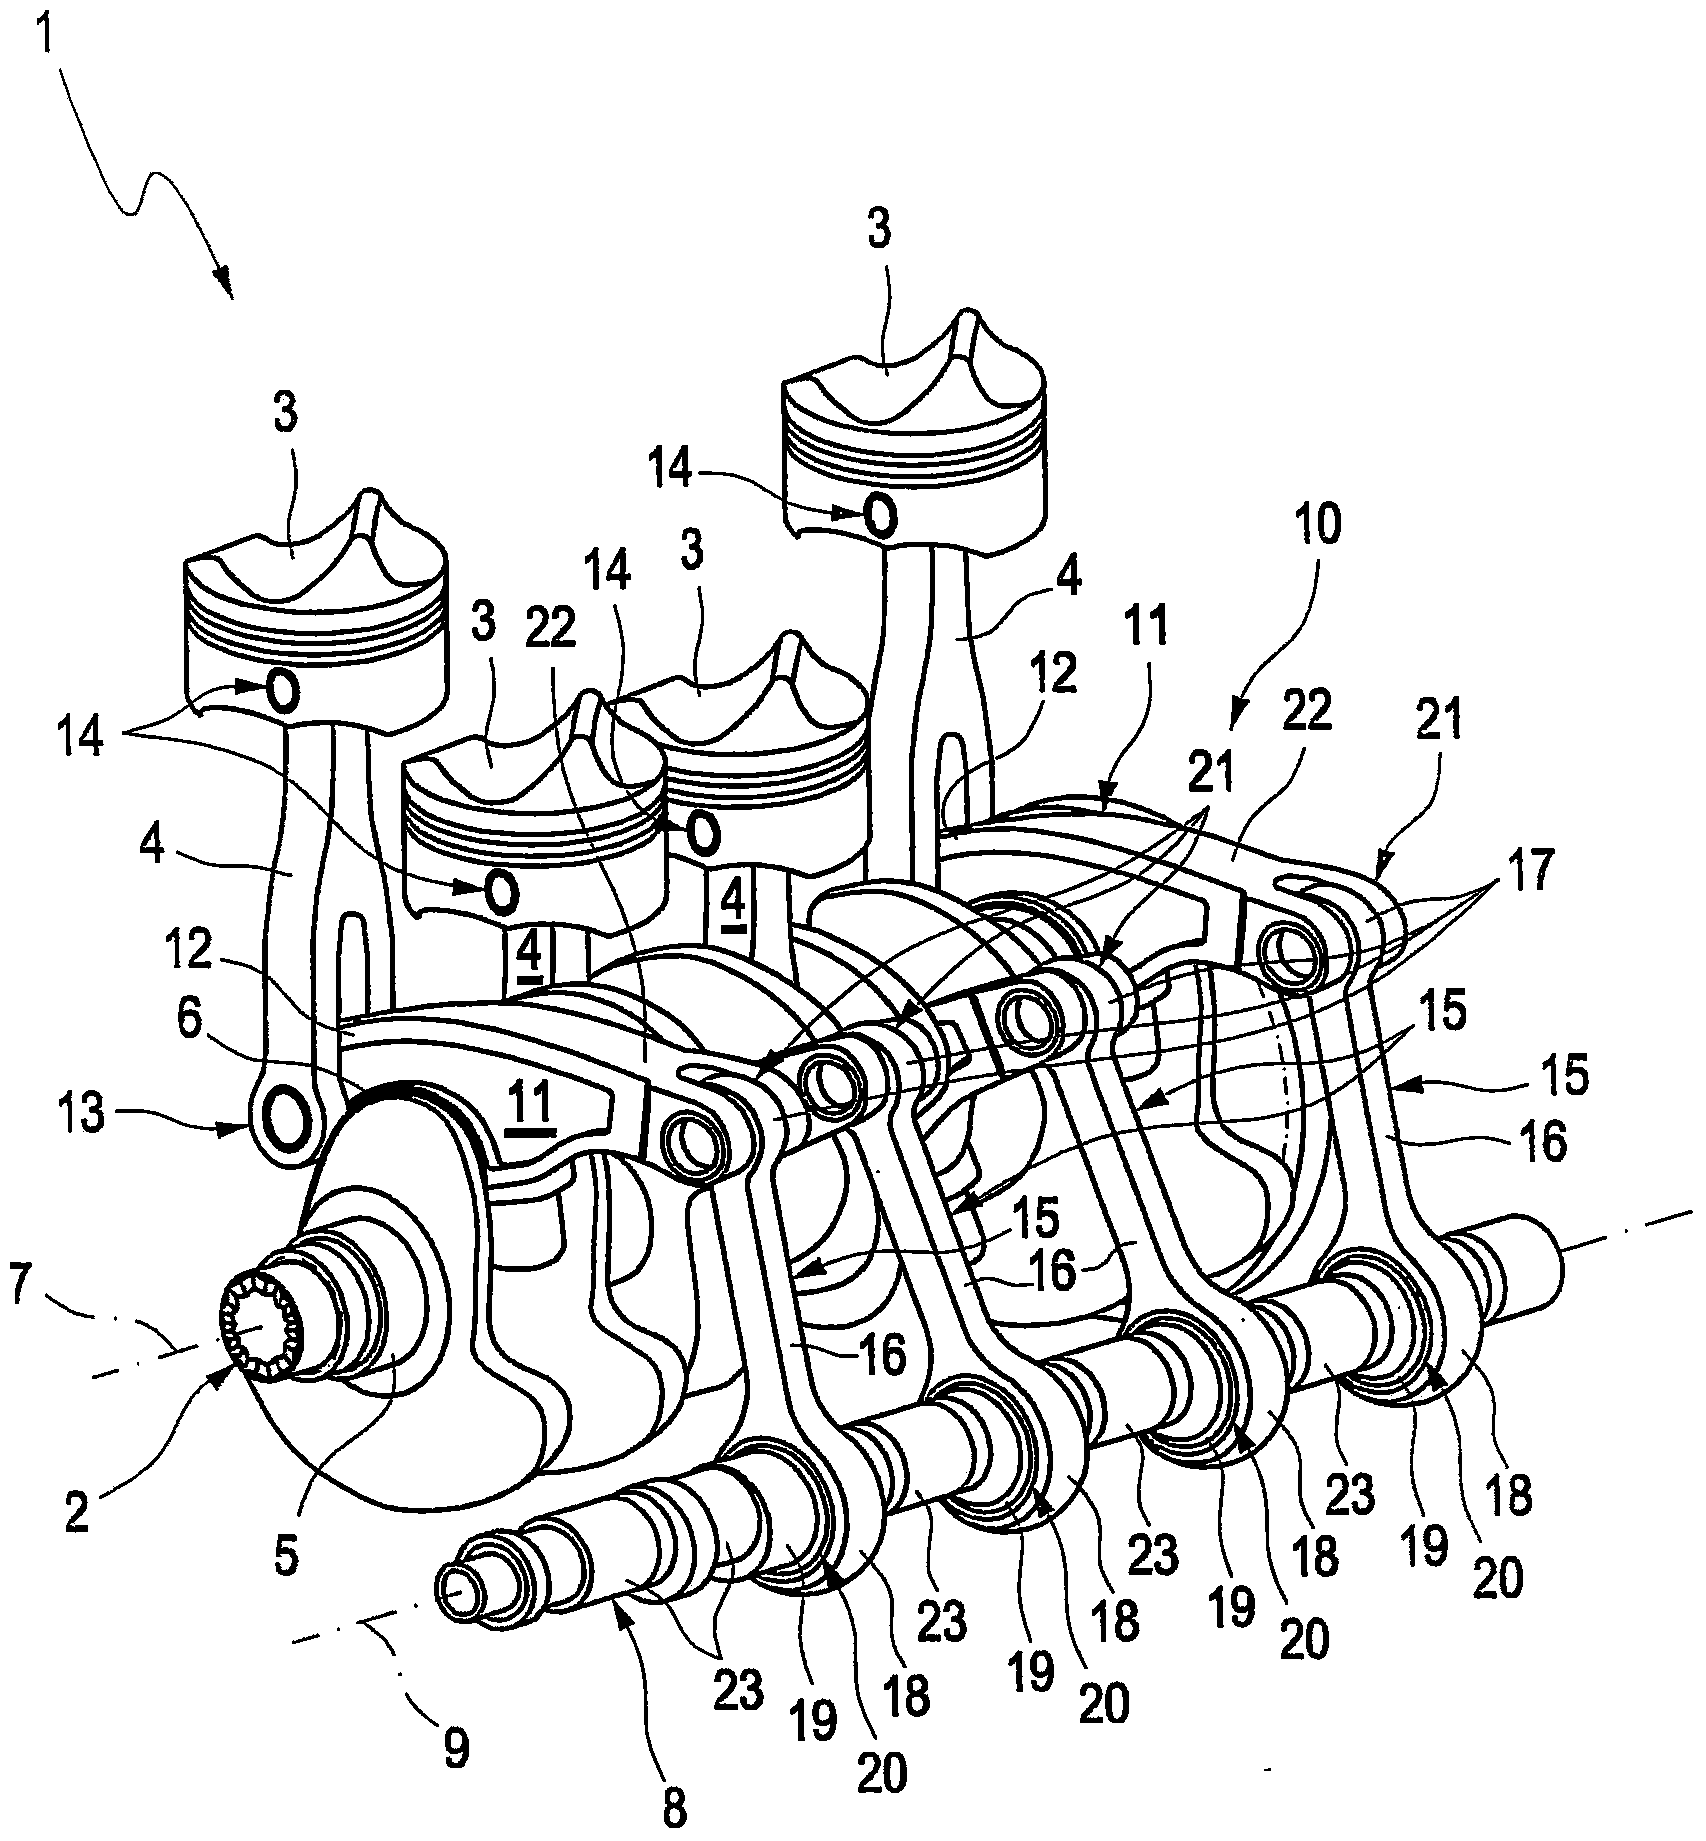 Internal combustion engine